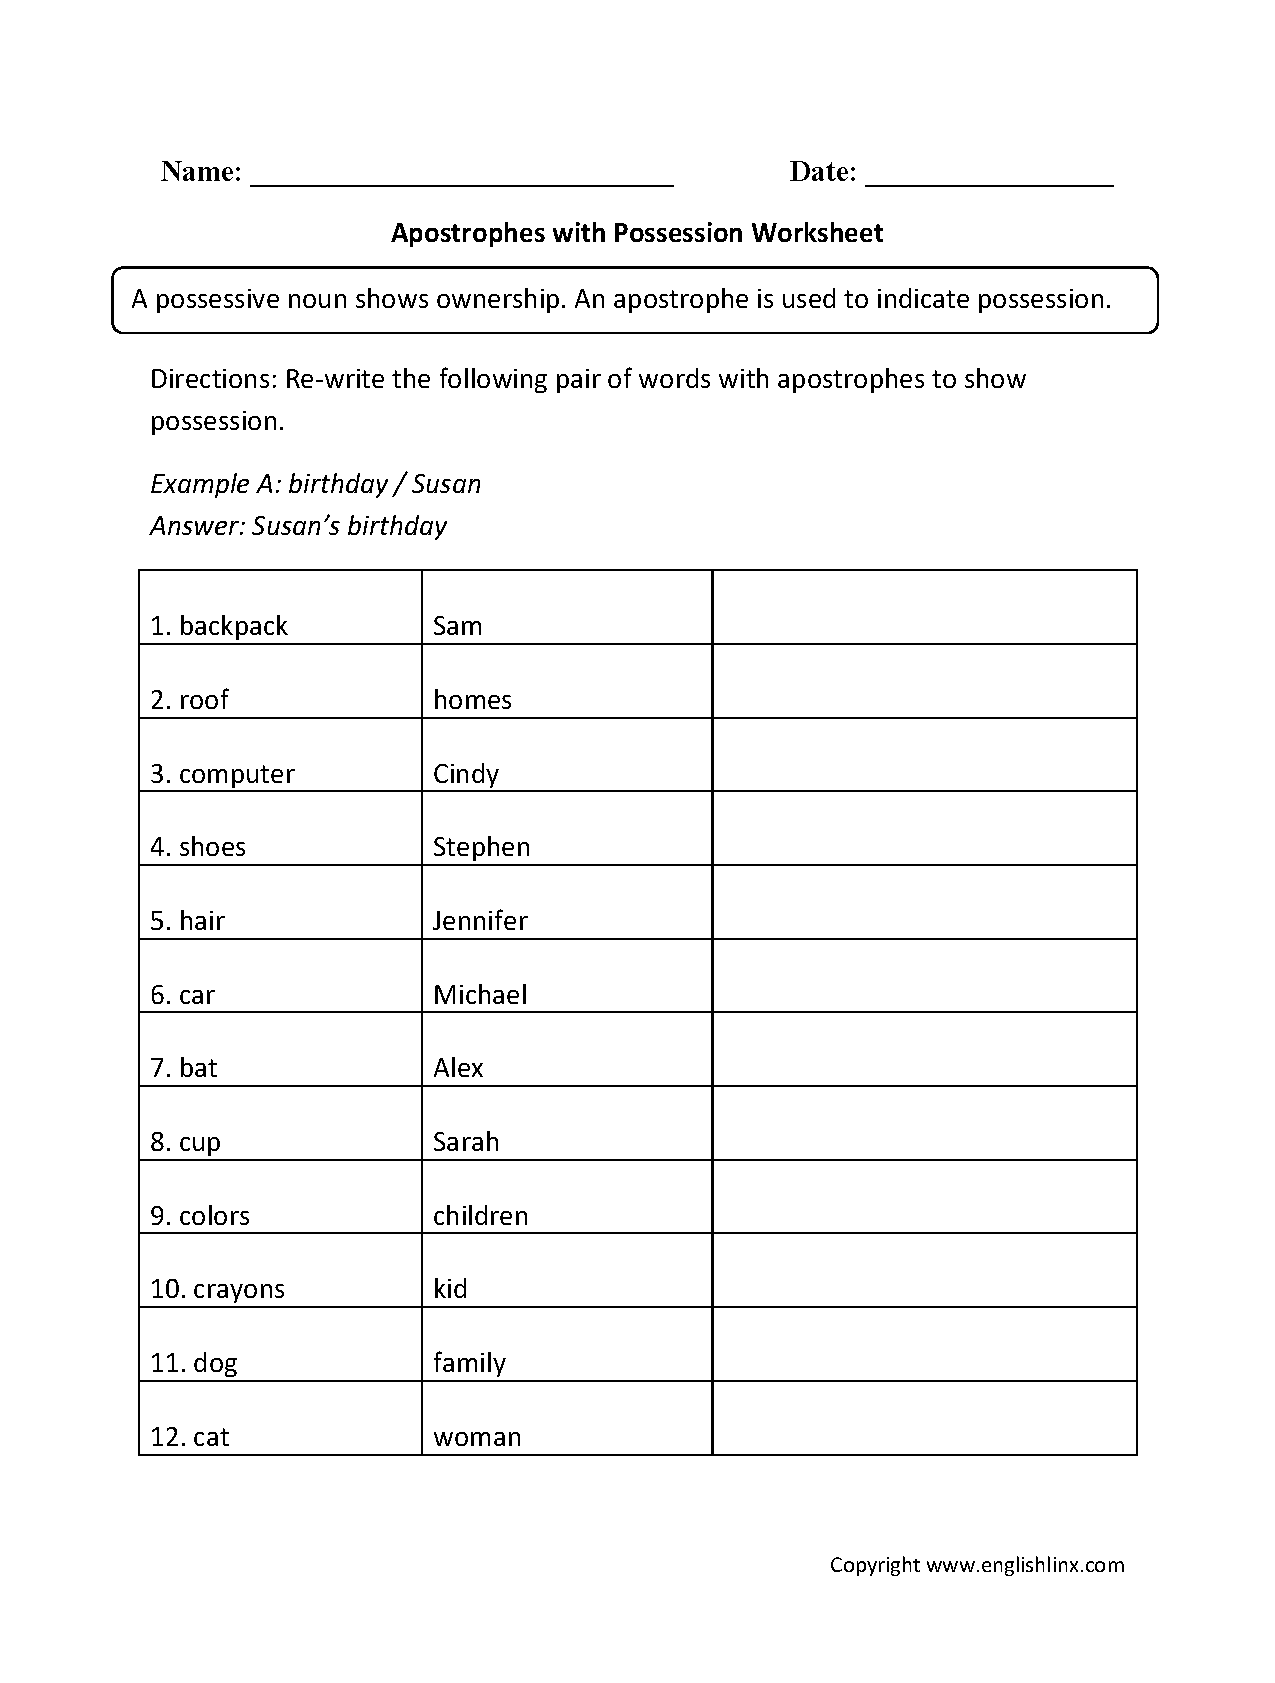 englishlinx-apostrophes-worksheets